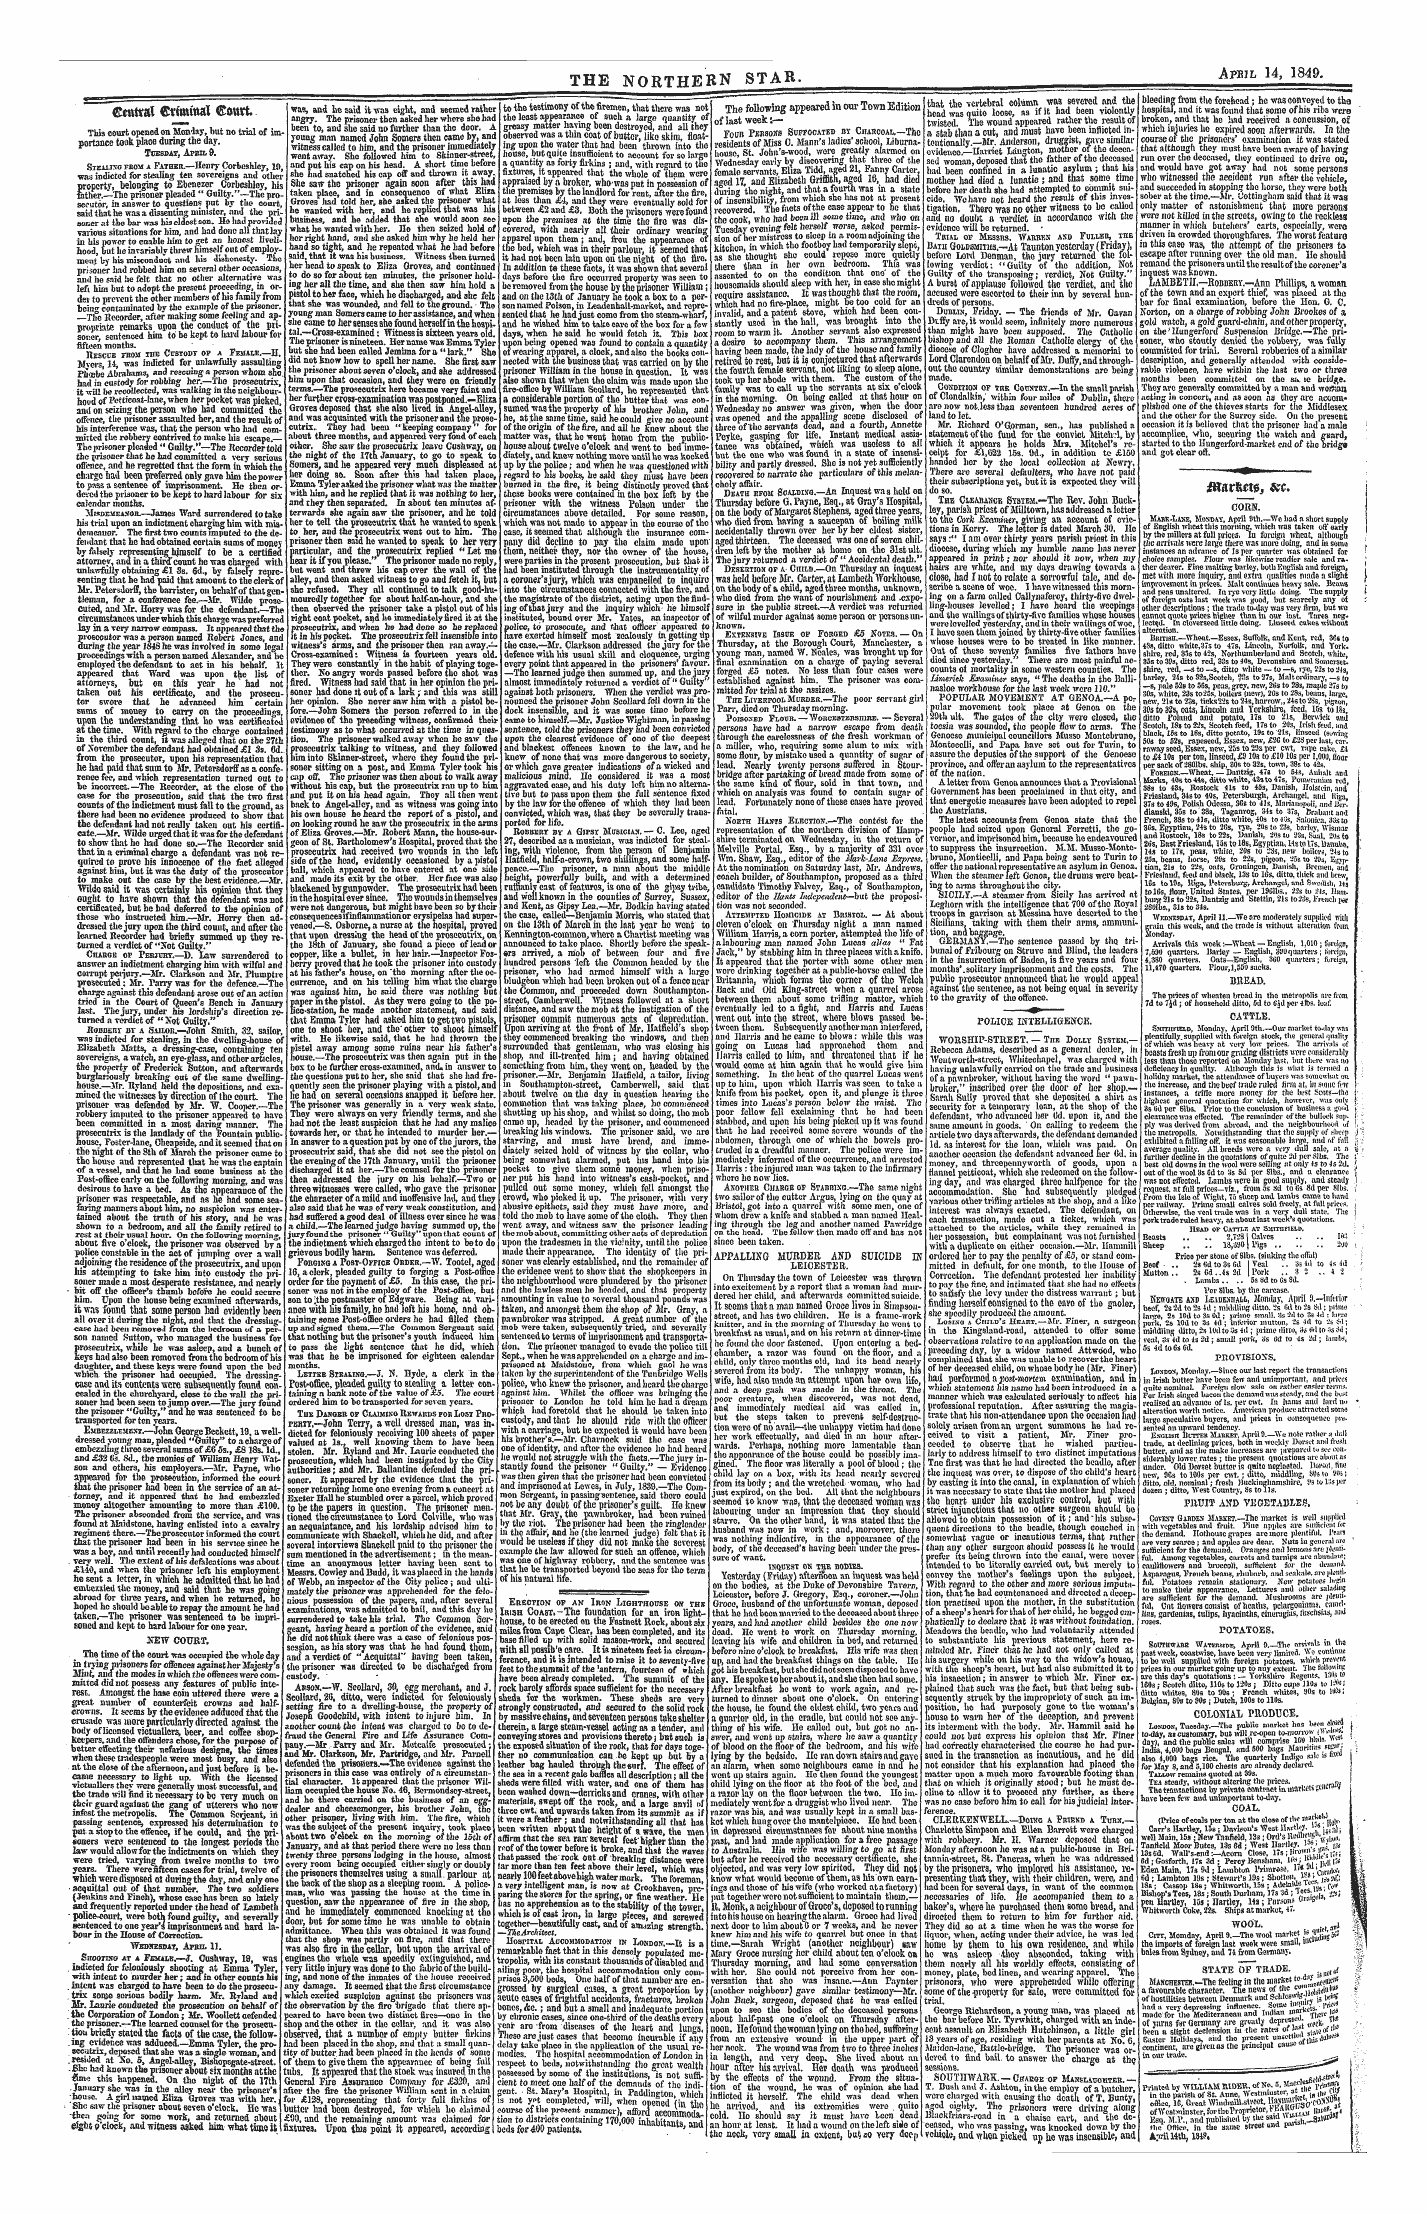 Northern Star (1837-1852): jS F Y, 1st edition - Vi Fflavitet$ 3 «X.